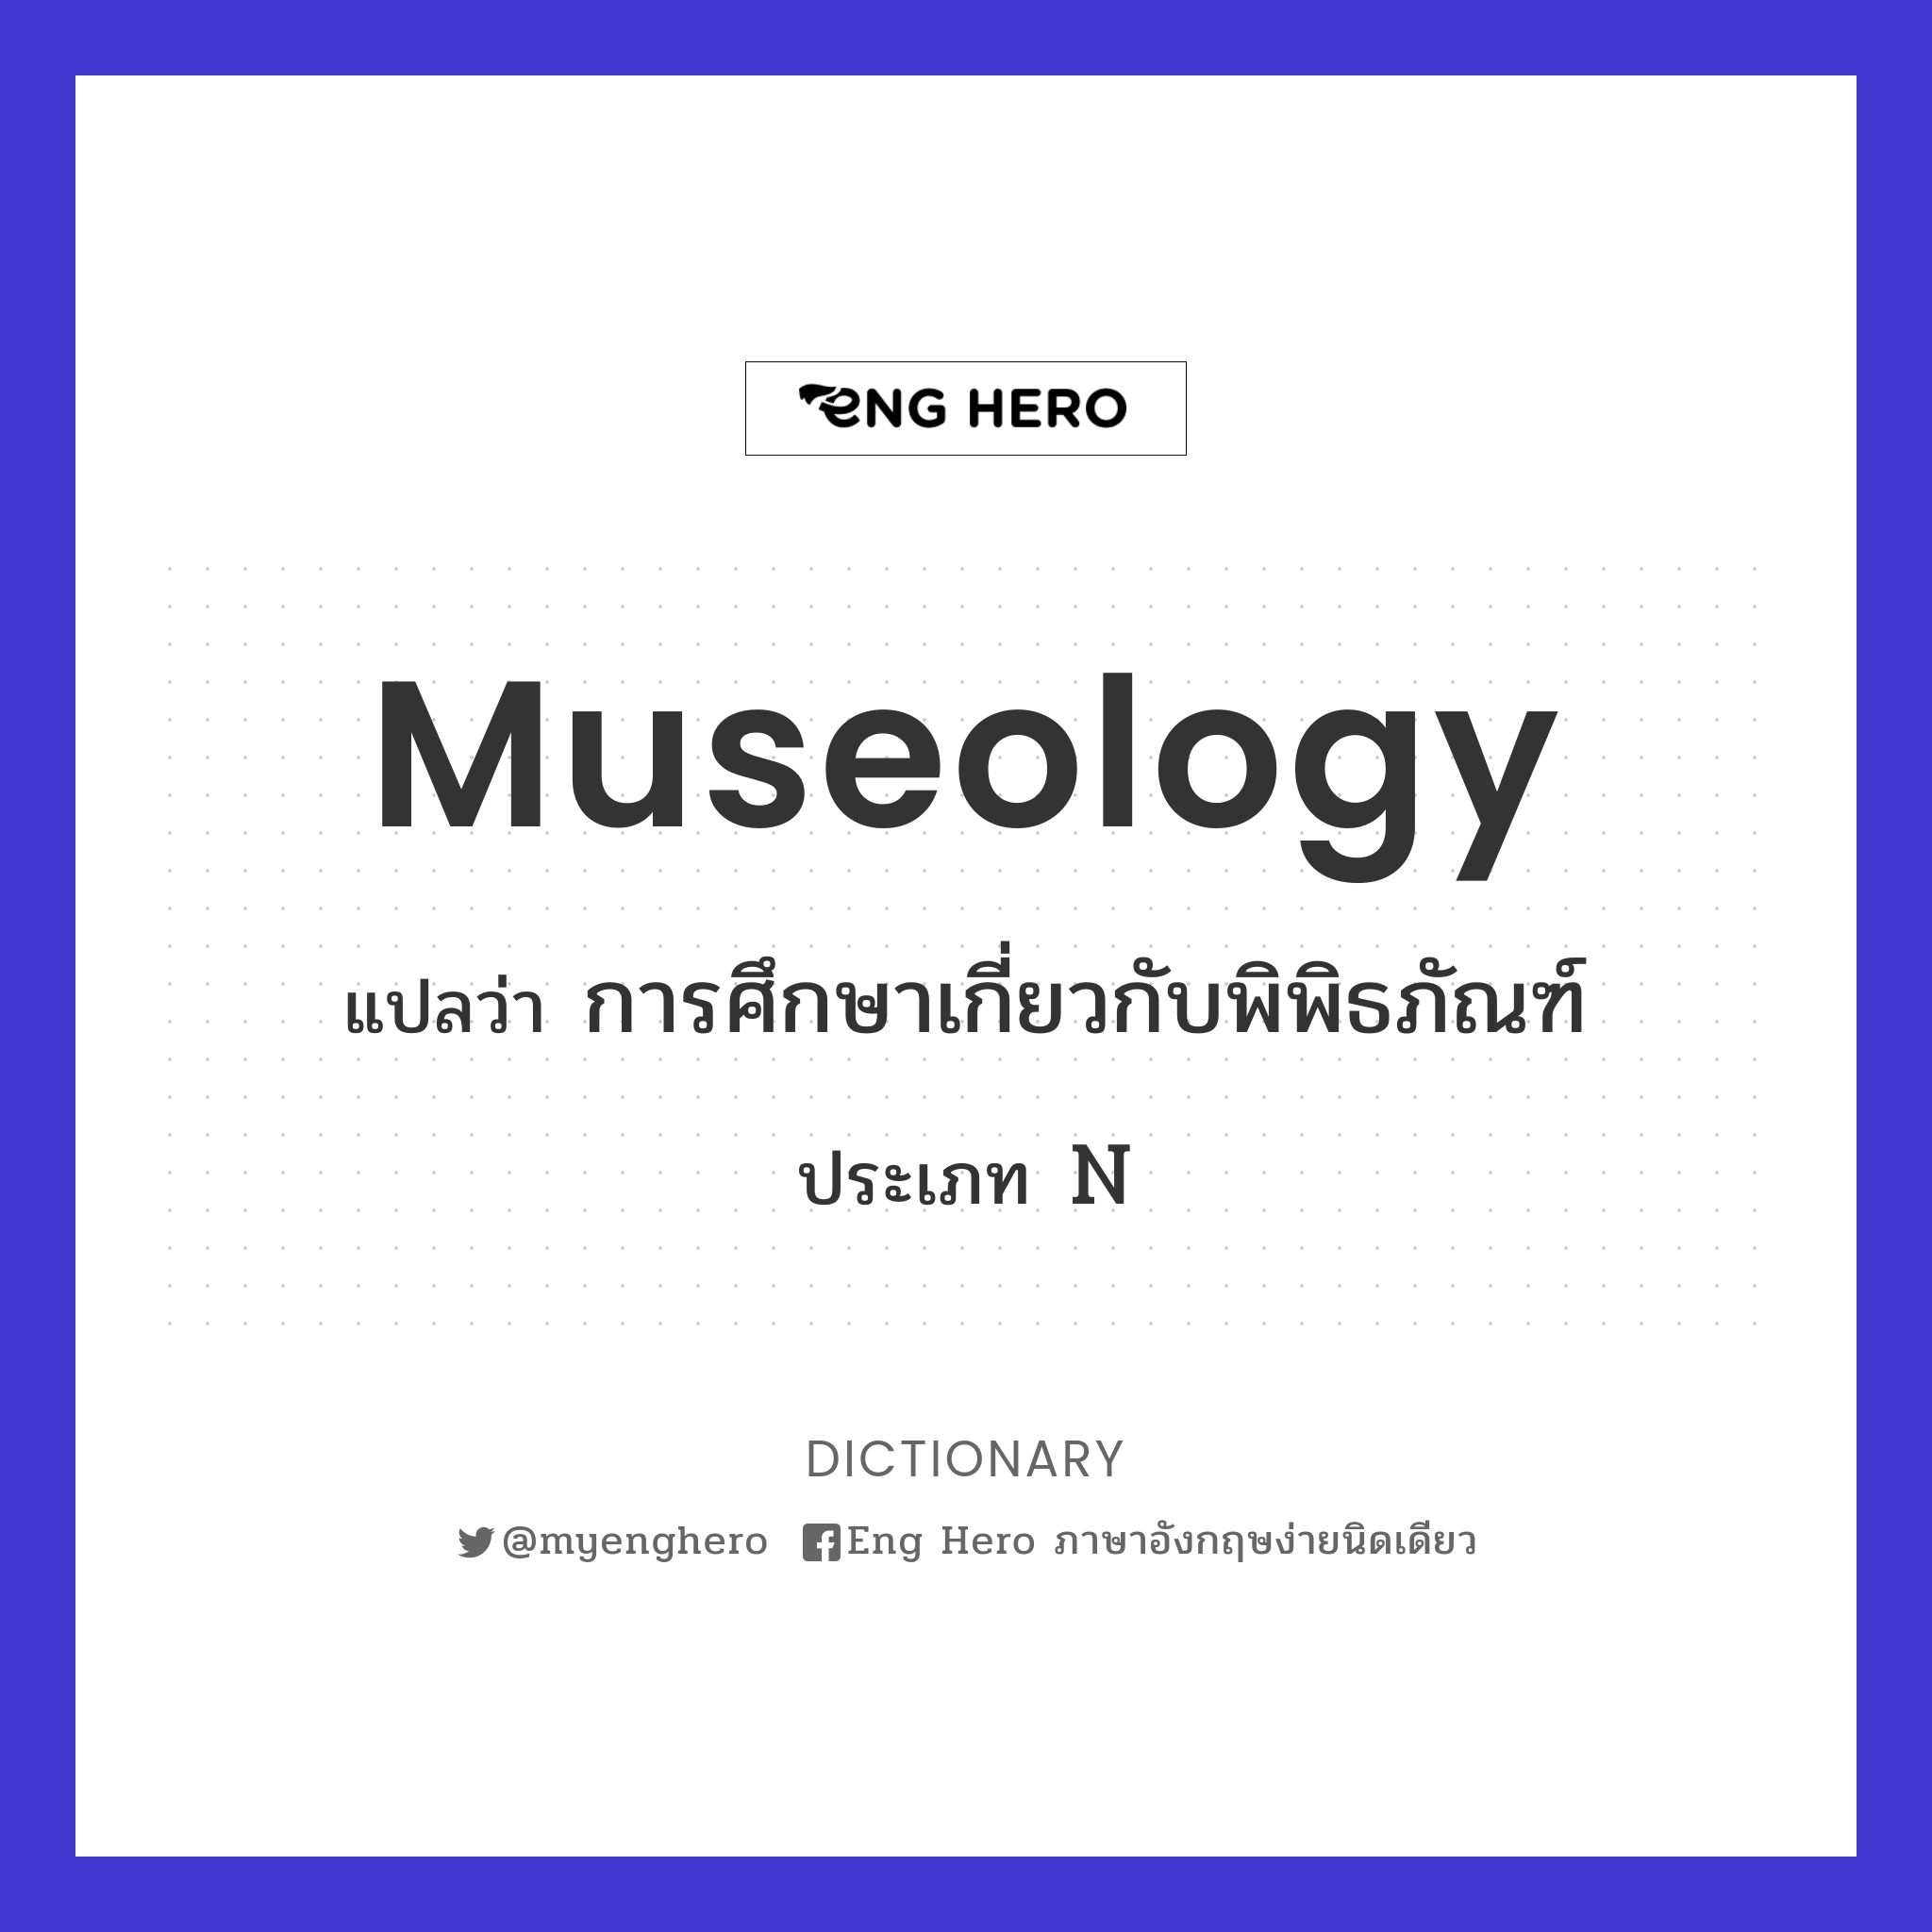 museology